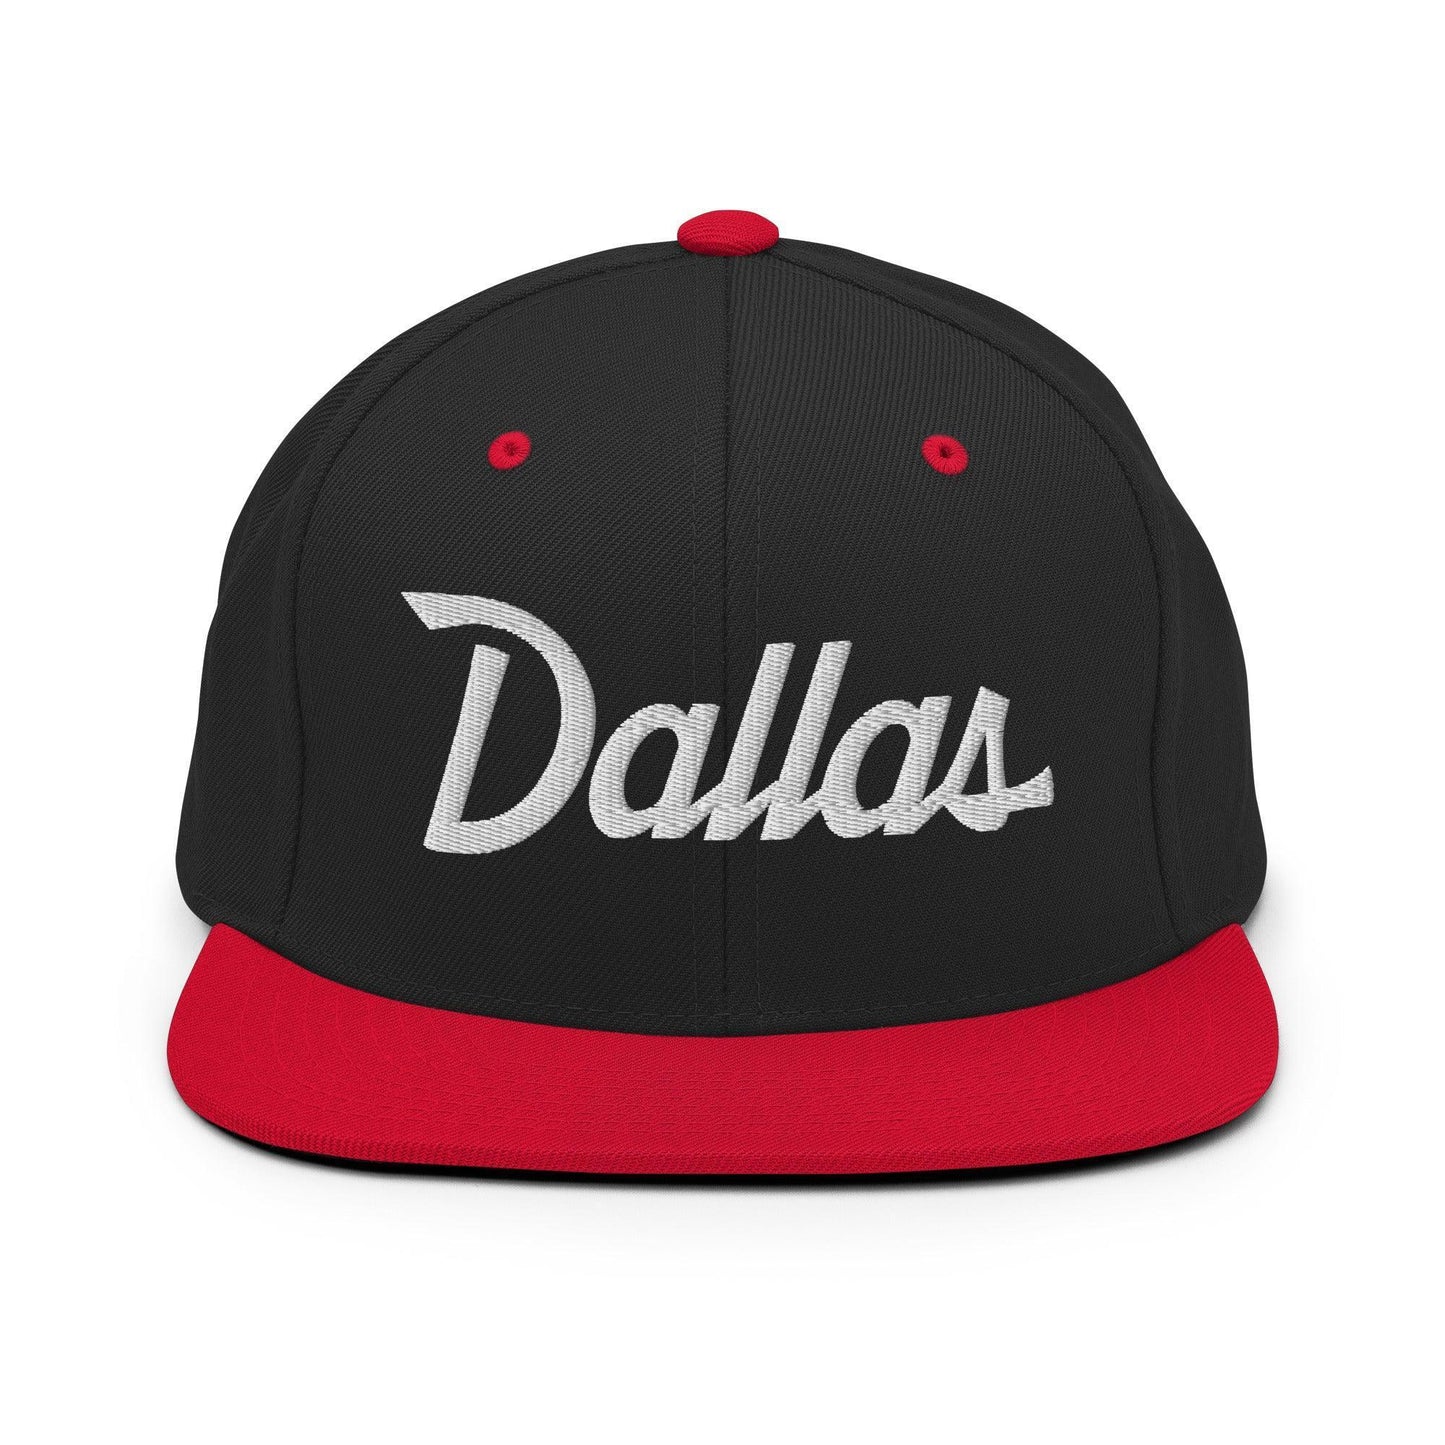 Dallas Script Snapback Hat Black Red